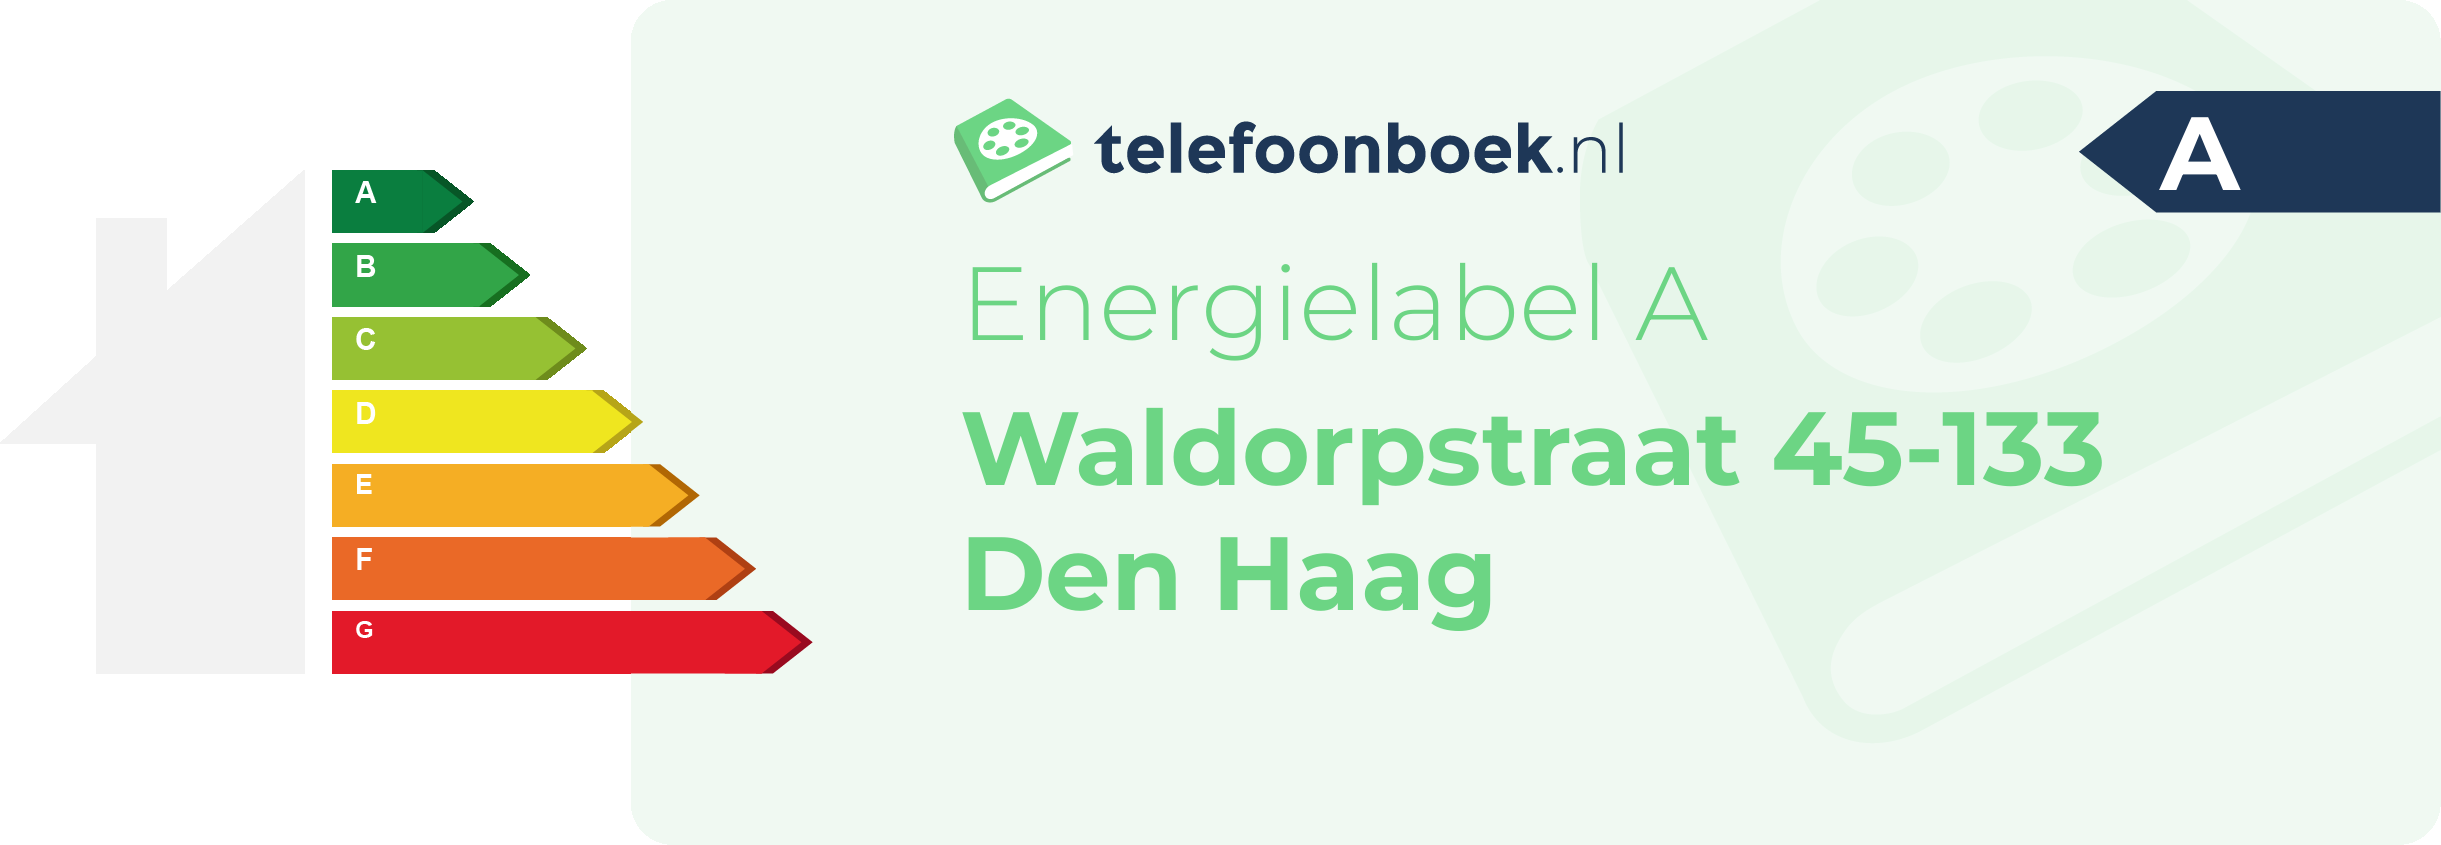 Energielabel Waldorpstraat 45-133 Den Haag